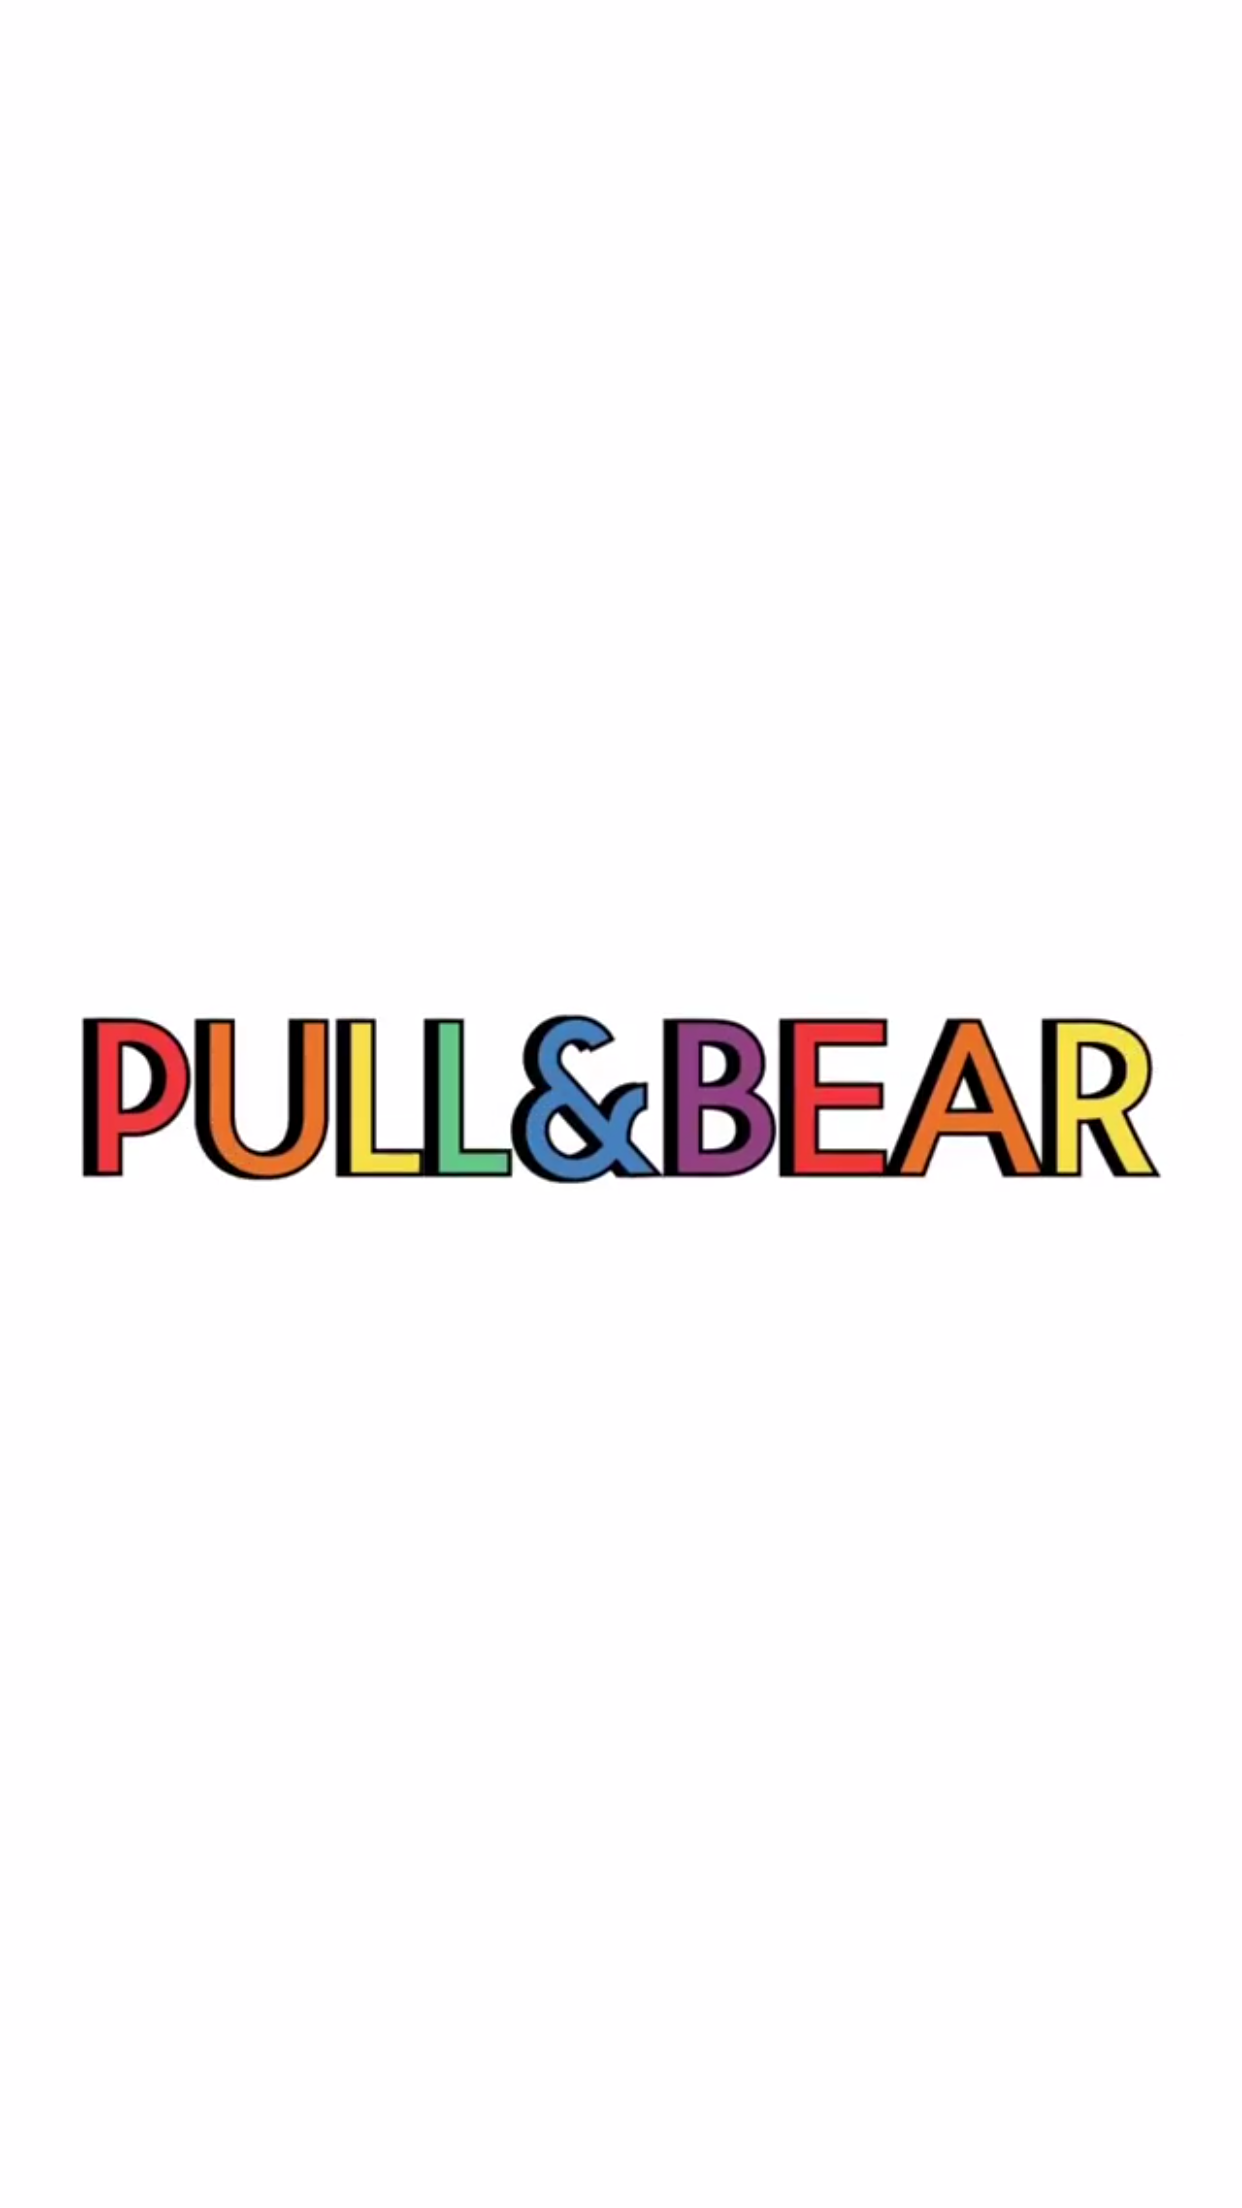 desain kaos pull & bear
